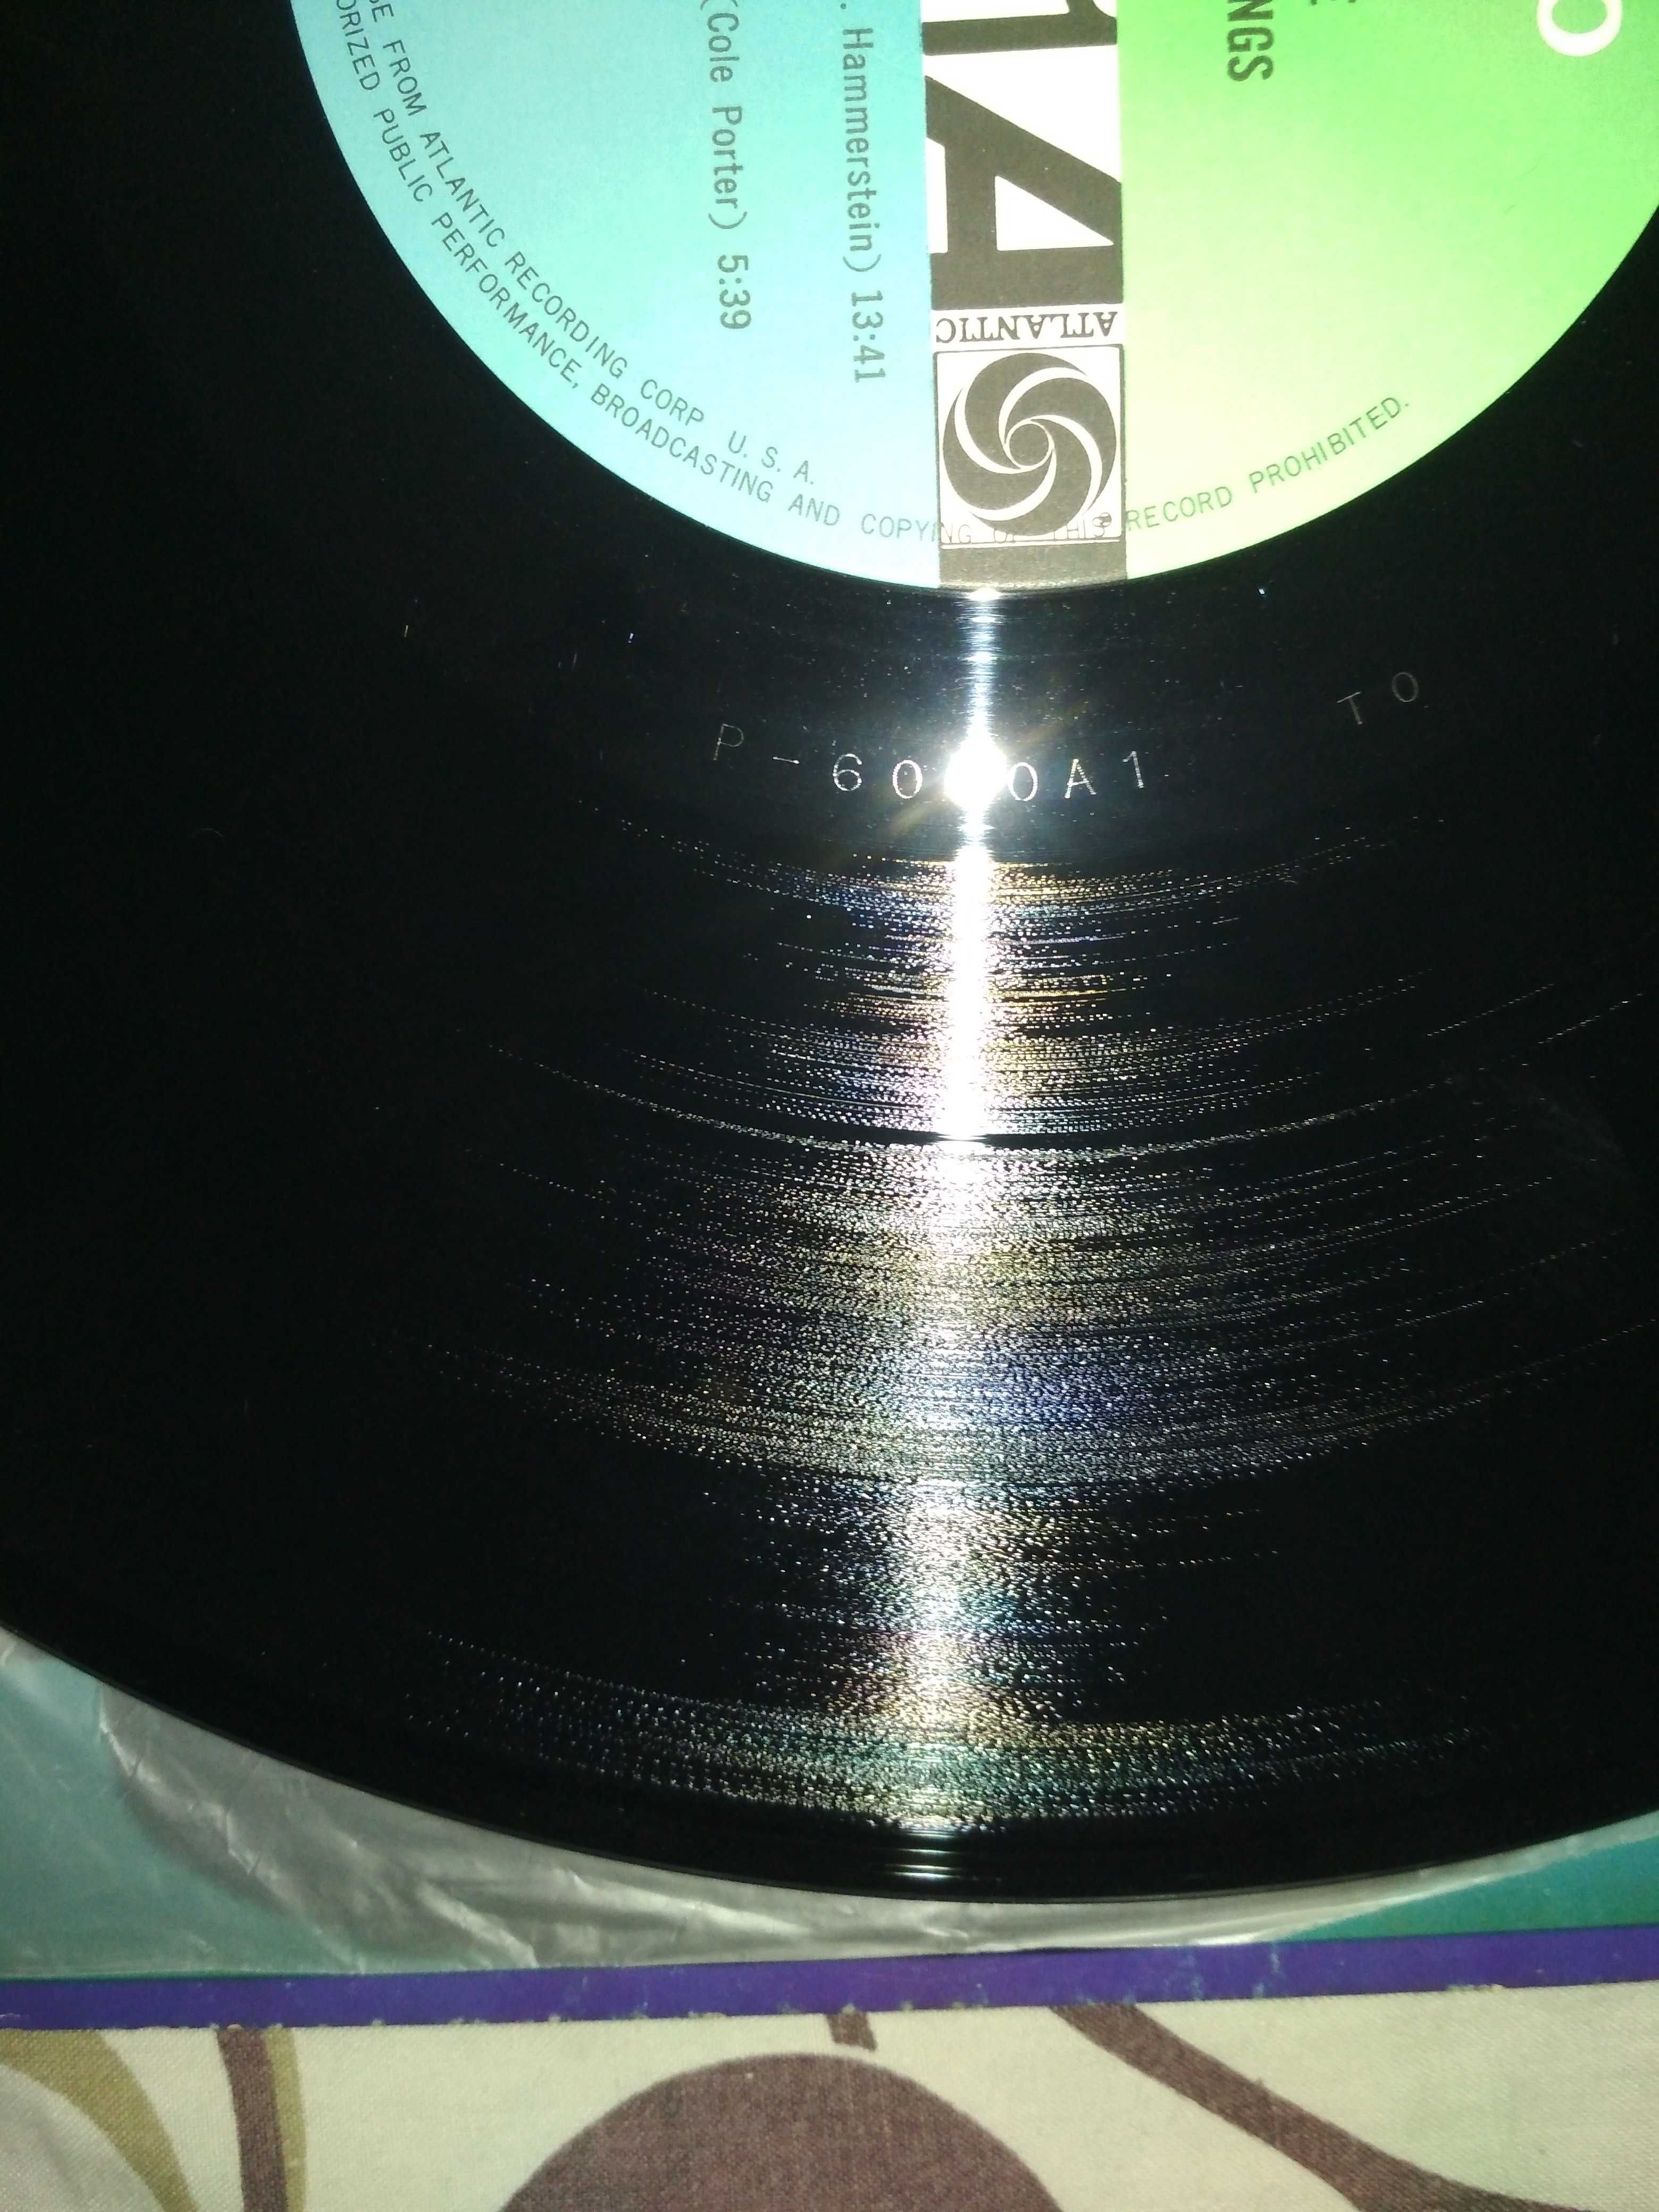 John Coltrane ‎– My Favorite Things (1976, Atlantic ‎– P-7505A, Japan)